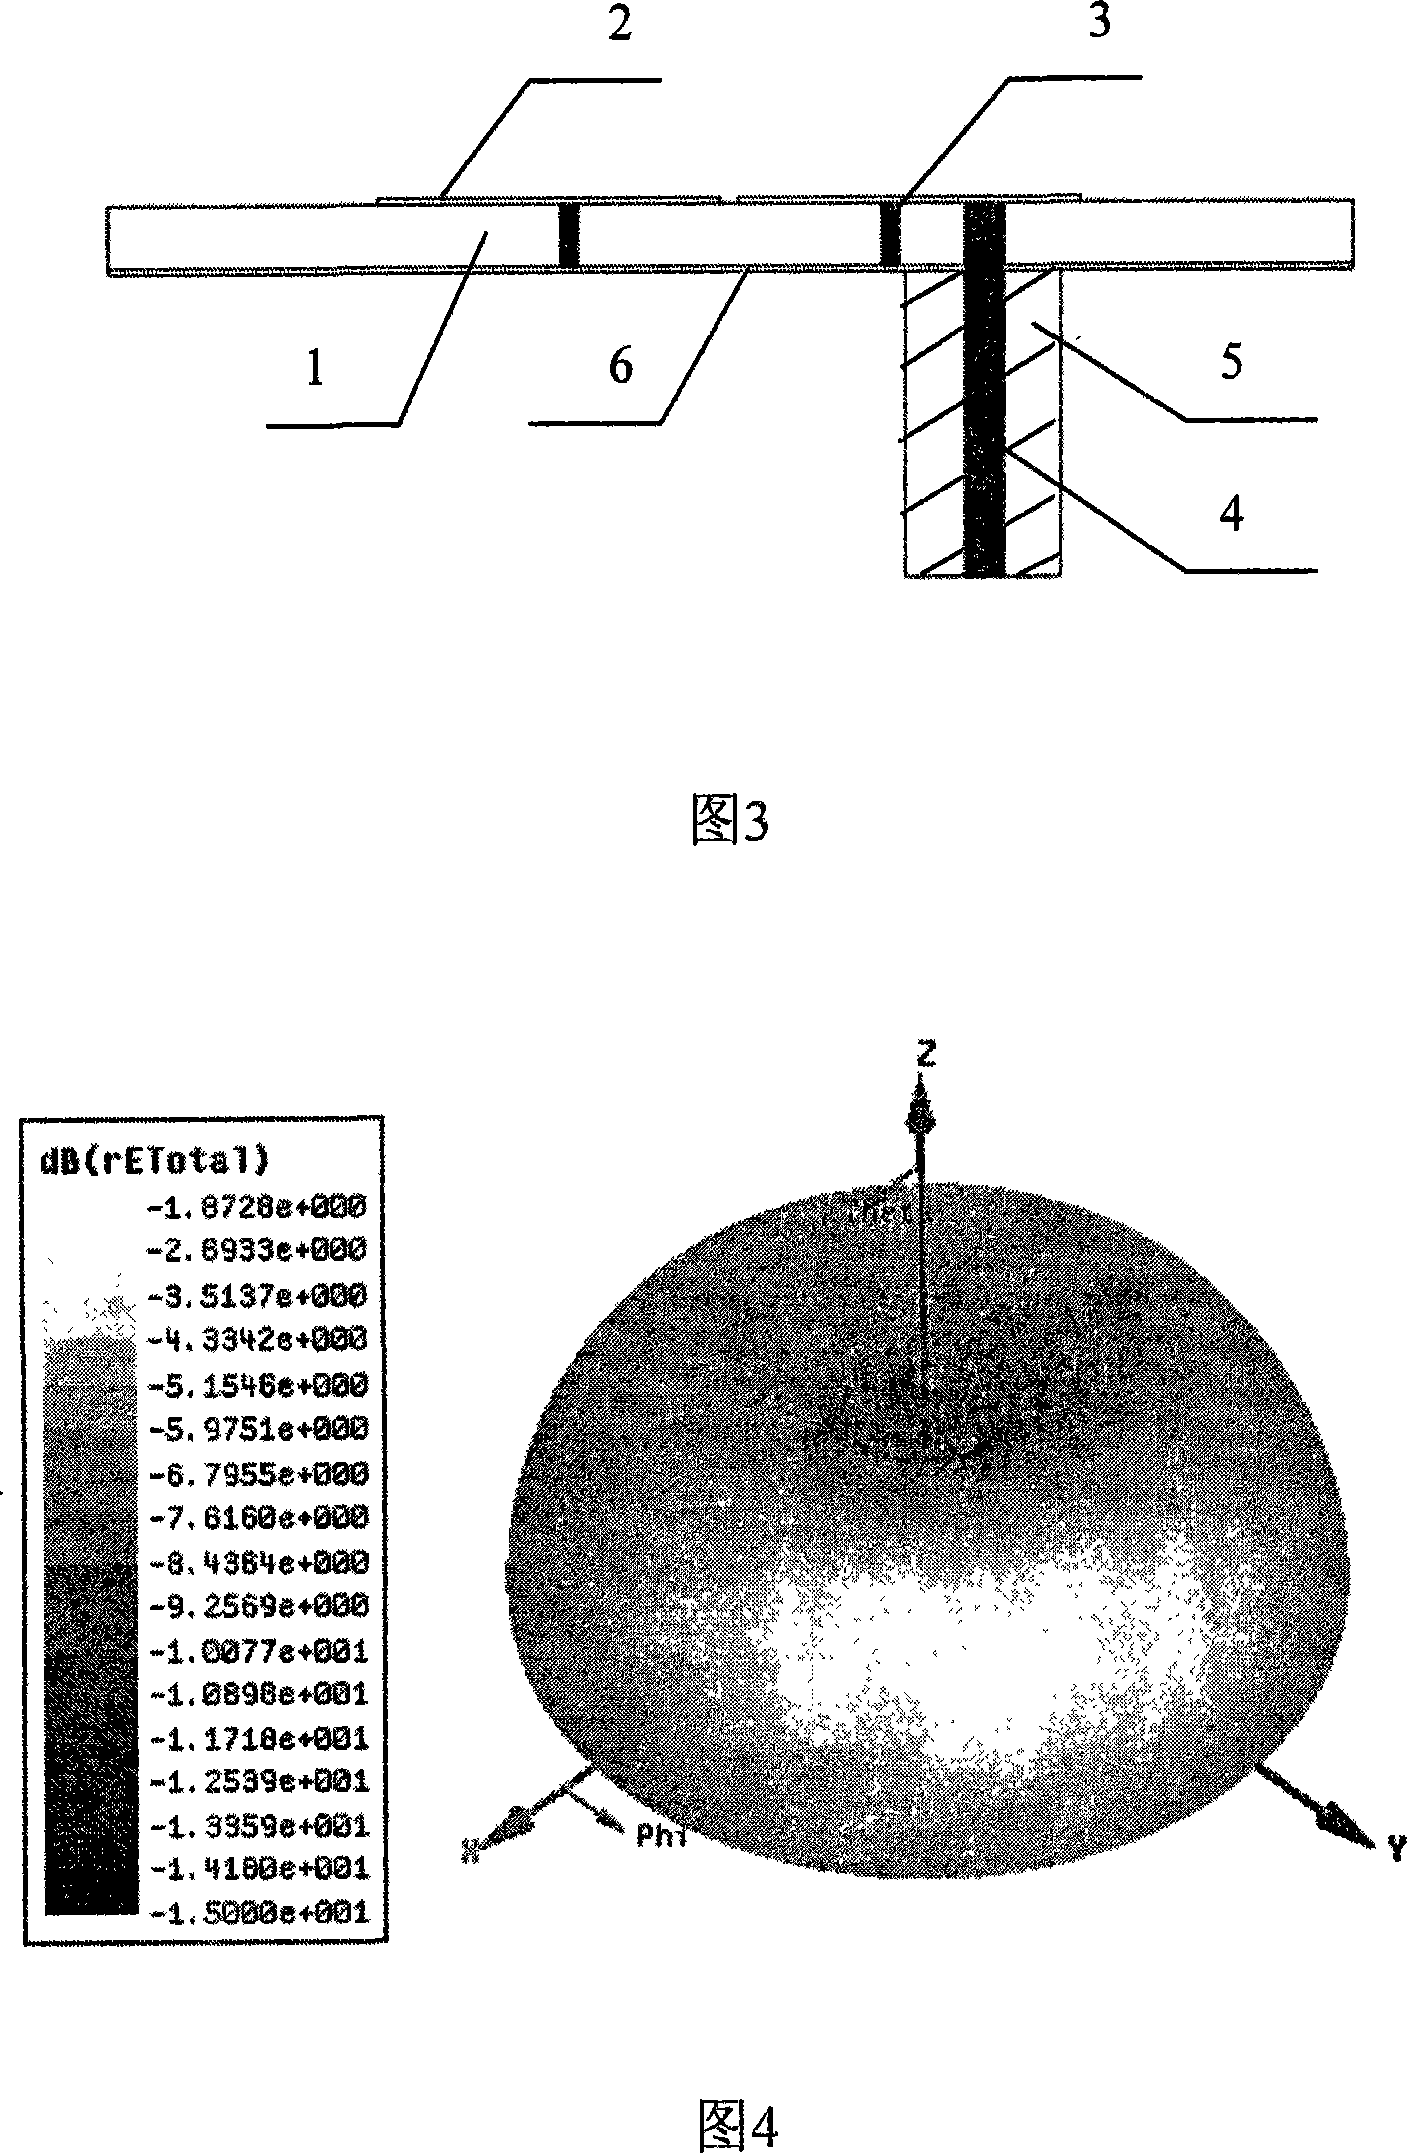 Omnidirectional radiative microstrip aerial